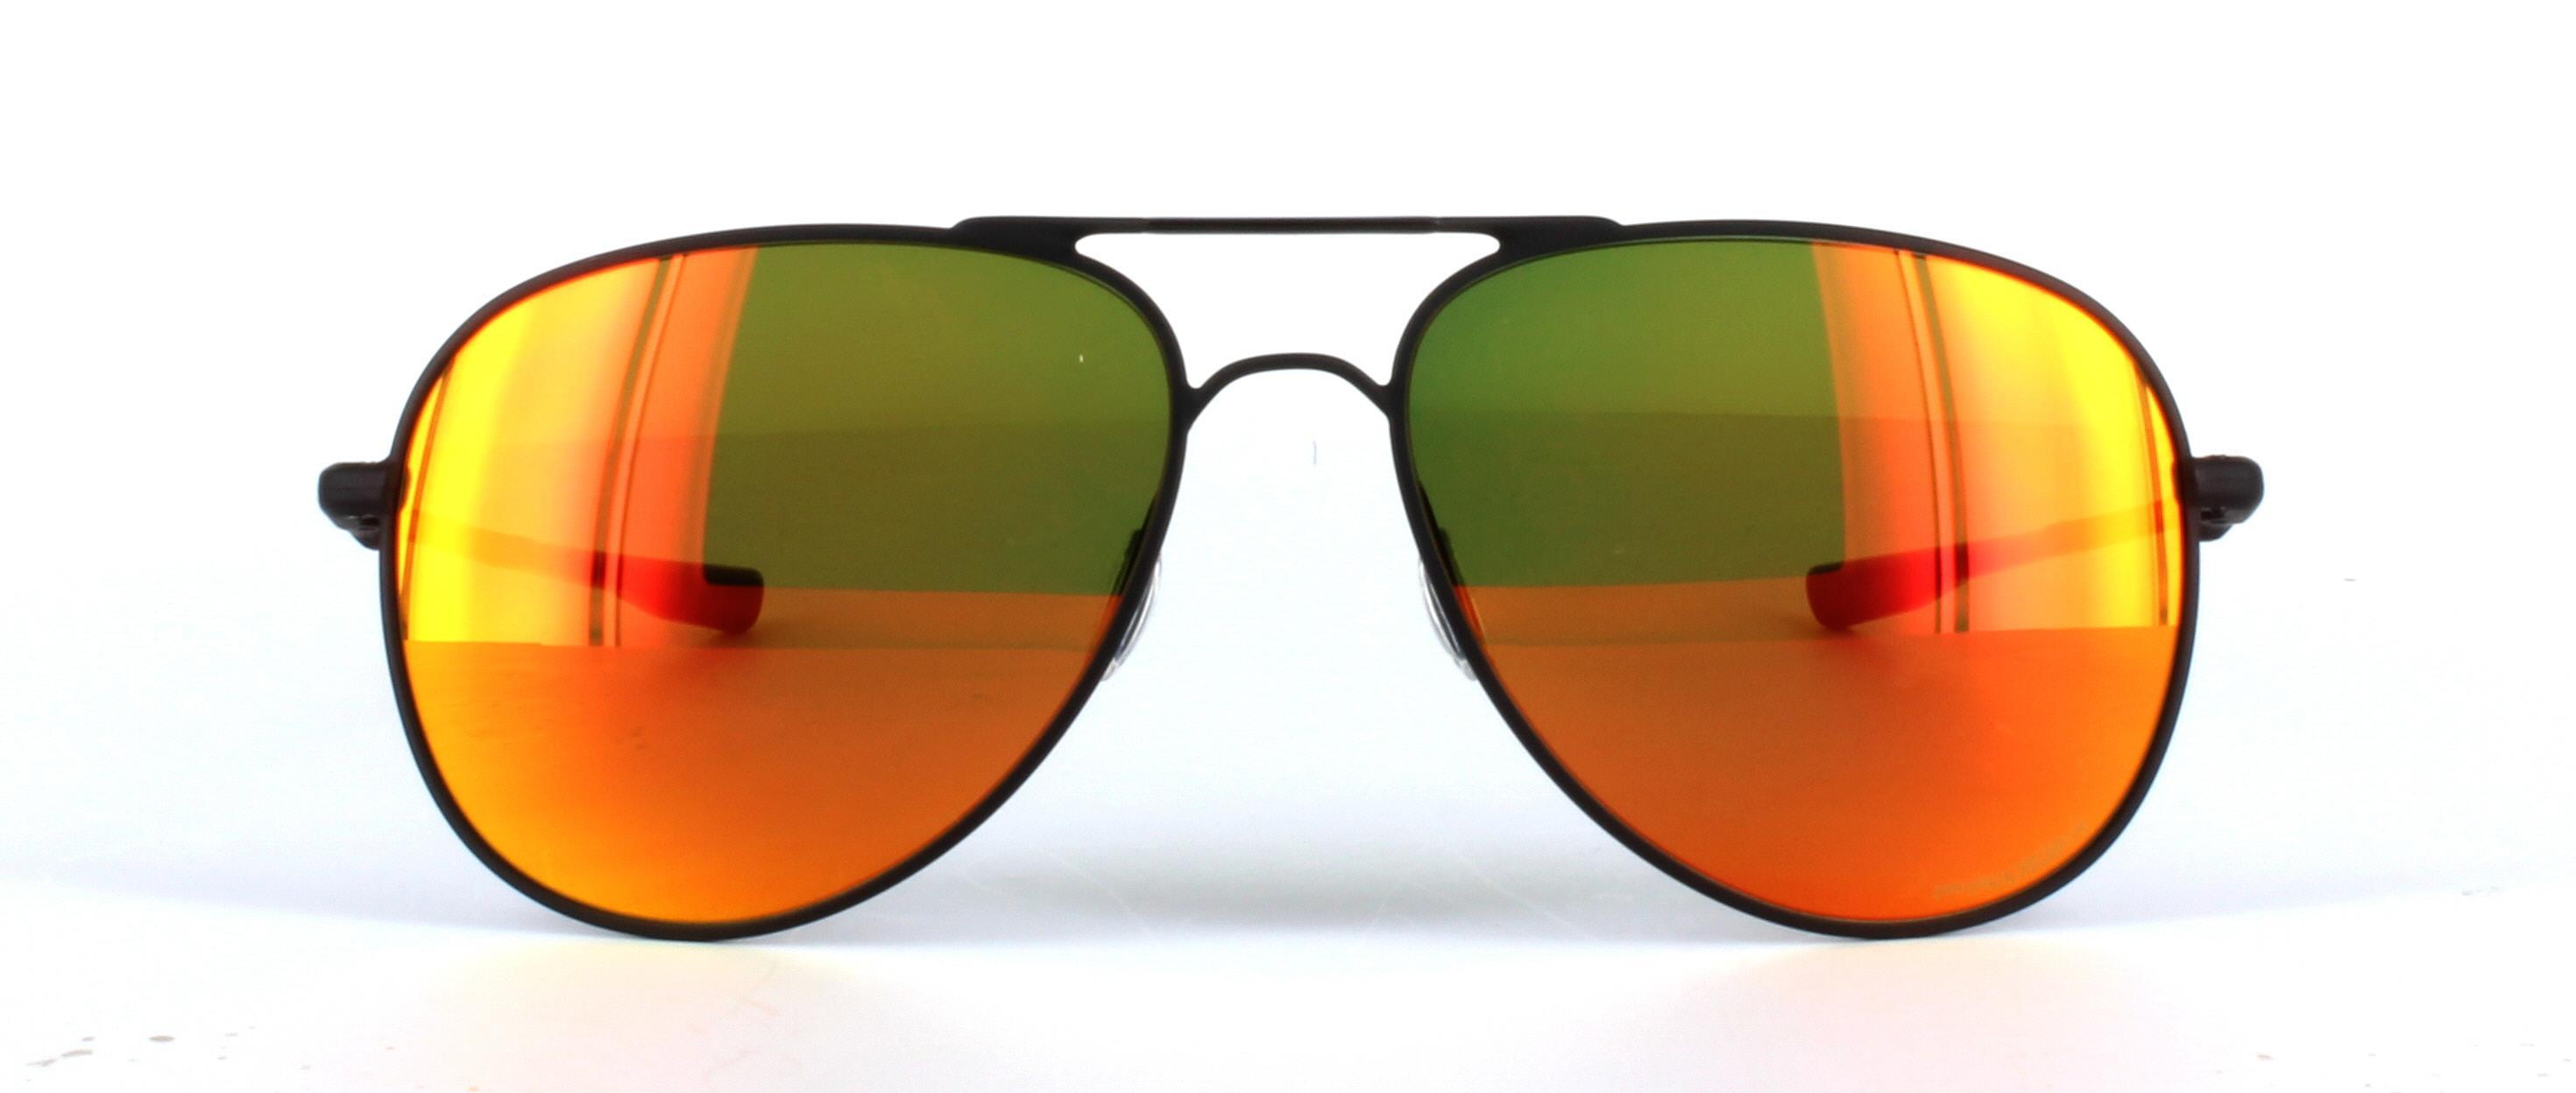 Oakley Elmont Black Full Rim Aviator Metal Prescription Sunglasses - Image View 5